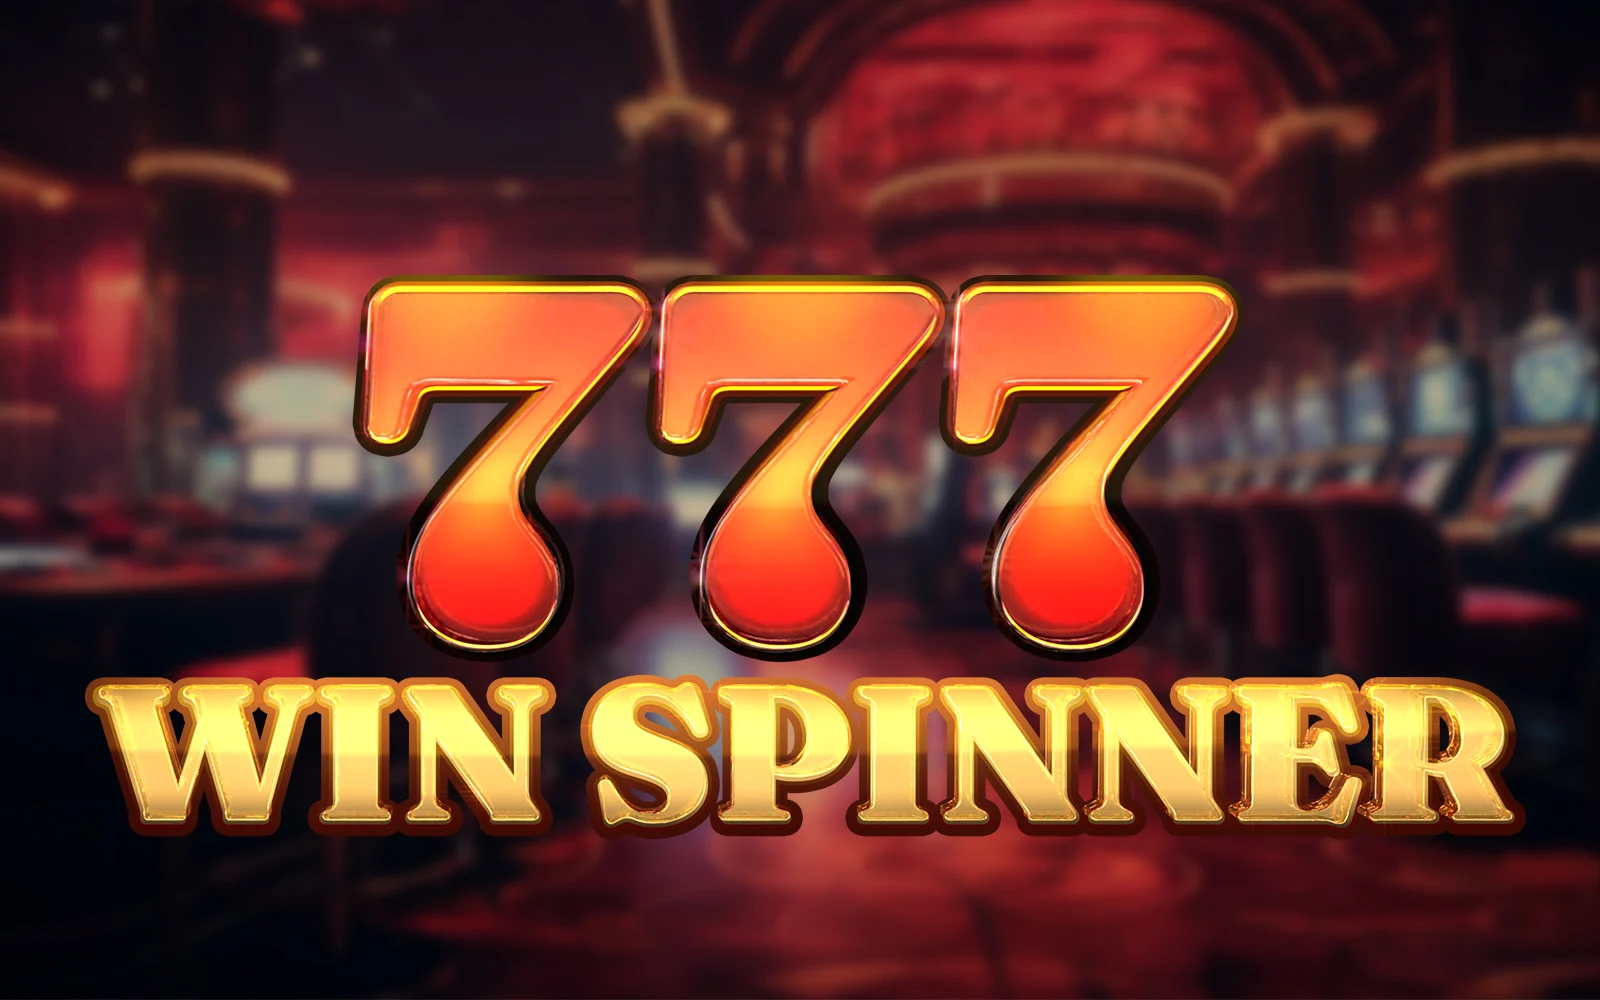 Play 777 Win Spinner on Starcasino.be online casino